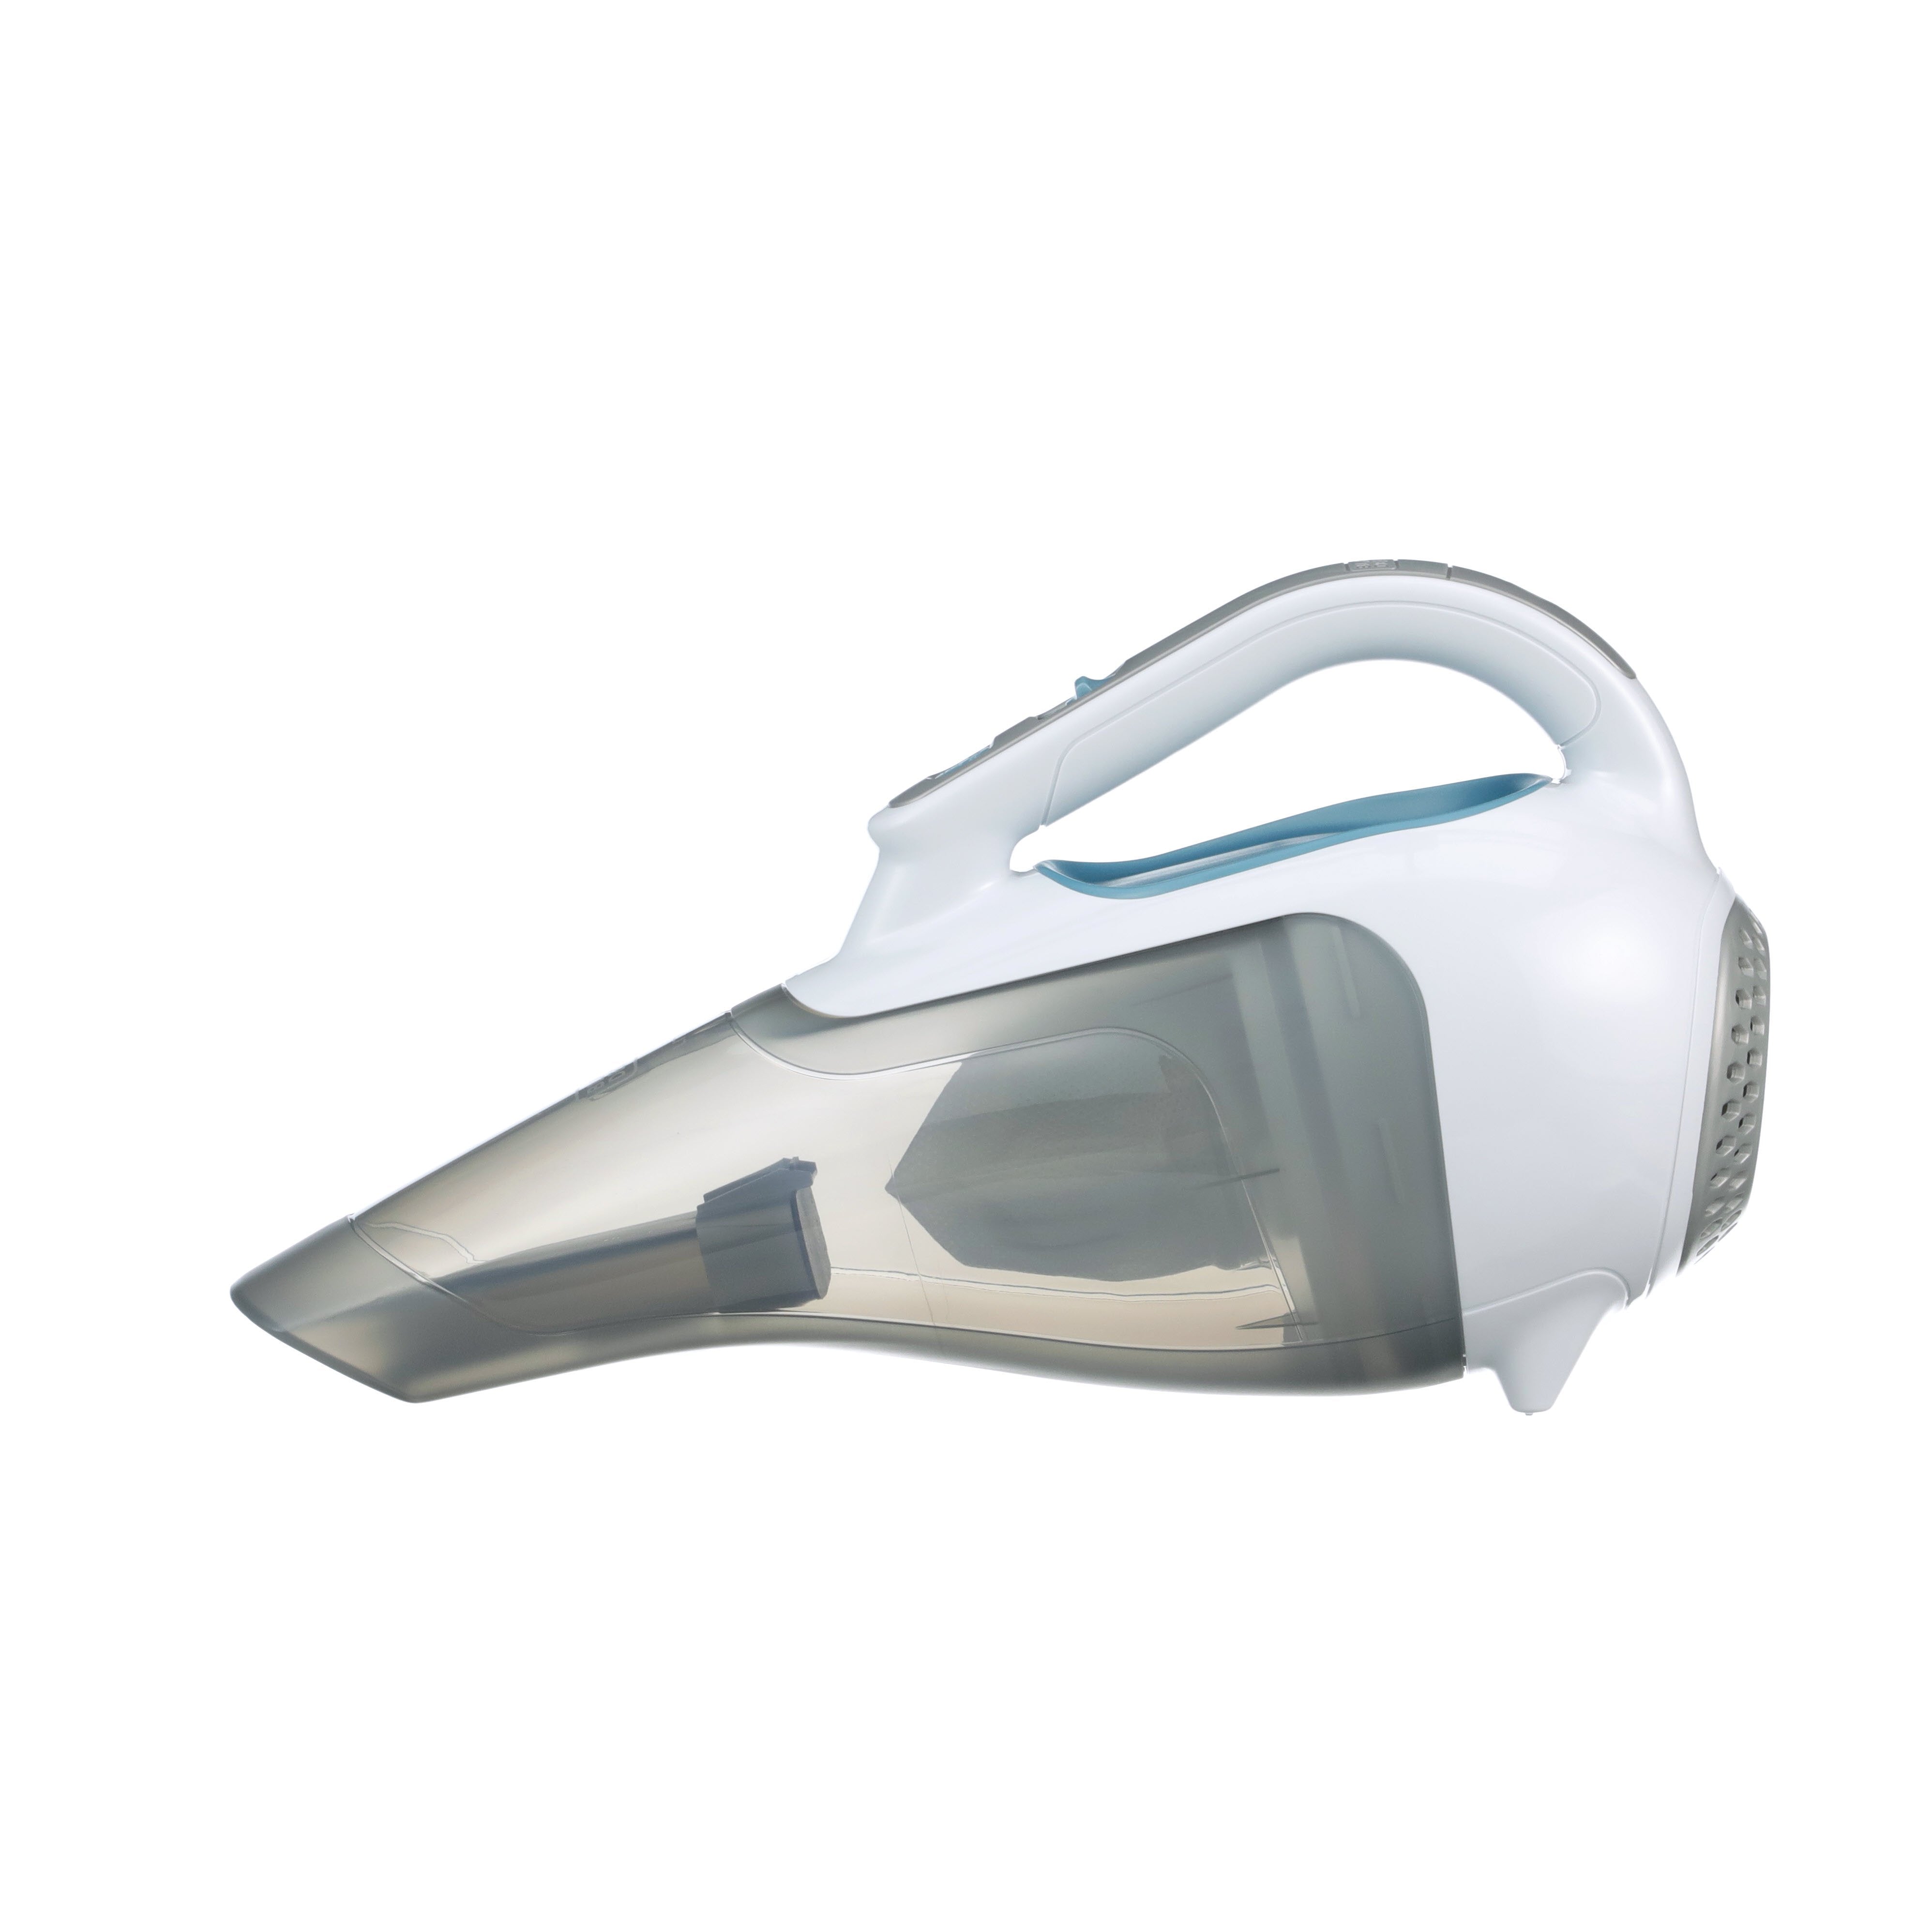 BLACK+DECKER dustbuster Cordless Handheld Vacuum, Flexi Blue/Grey/White ( HHVI315JO42) 49.99 - Quarter Price